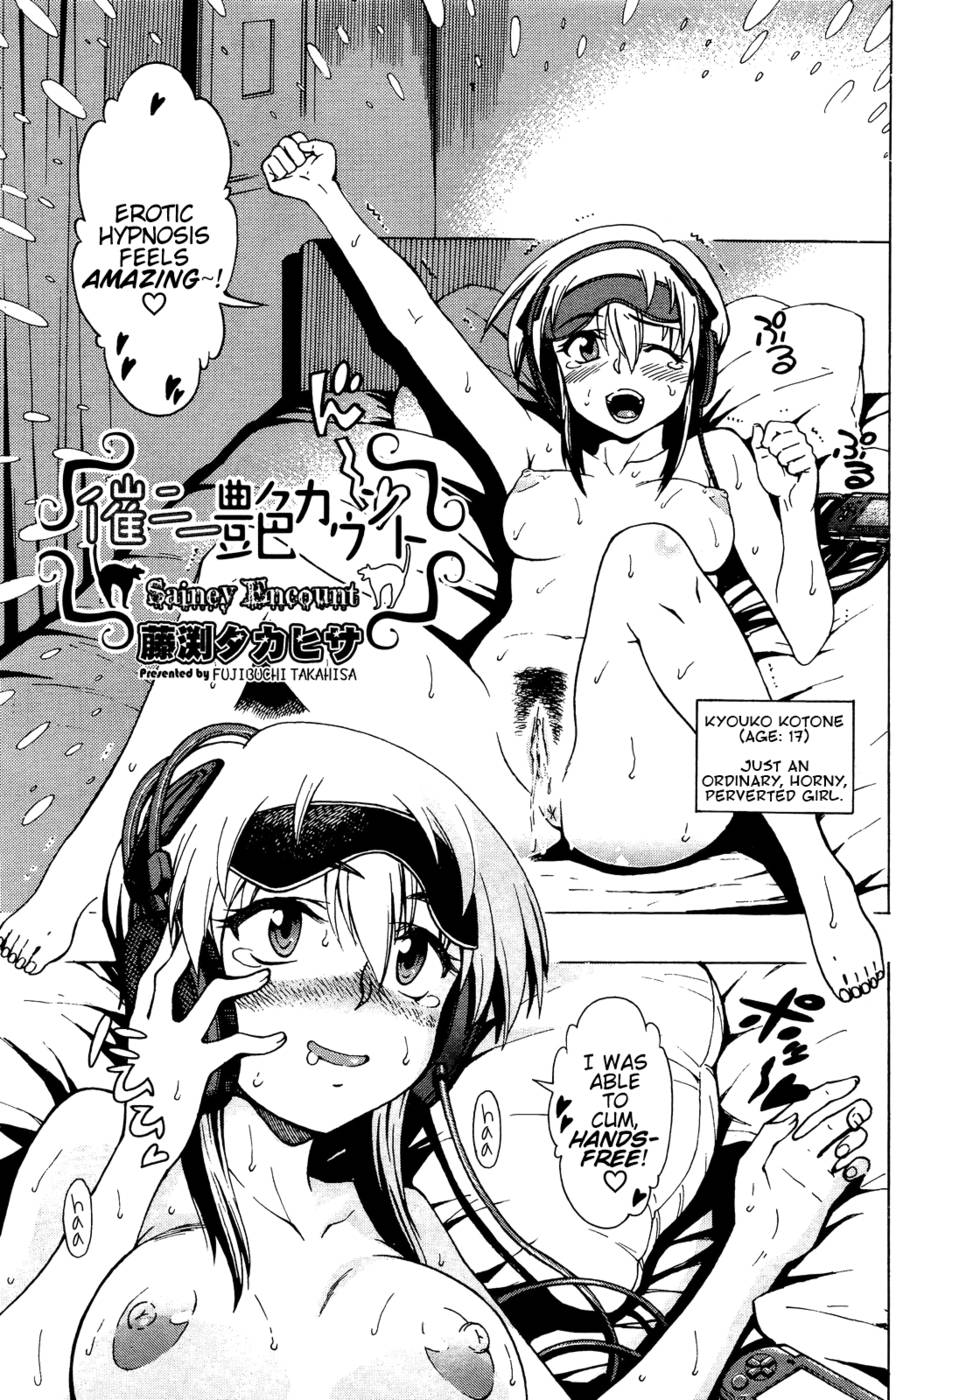 Hentai Manga Comic-Sainey Encount-Read-3